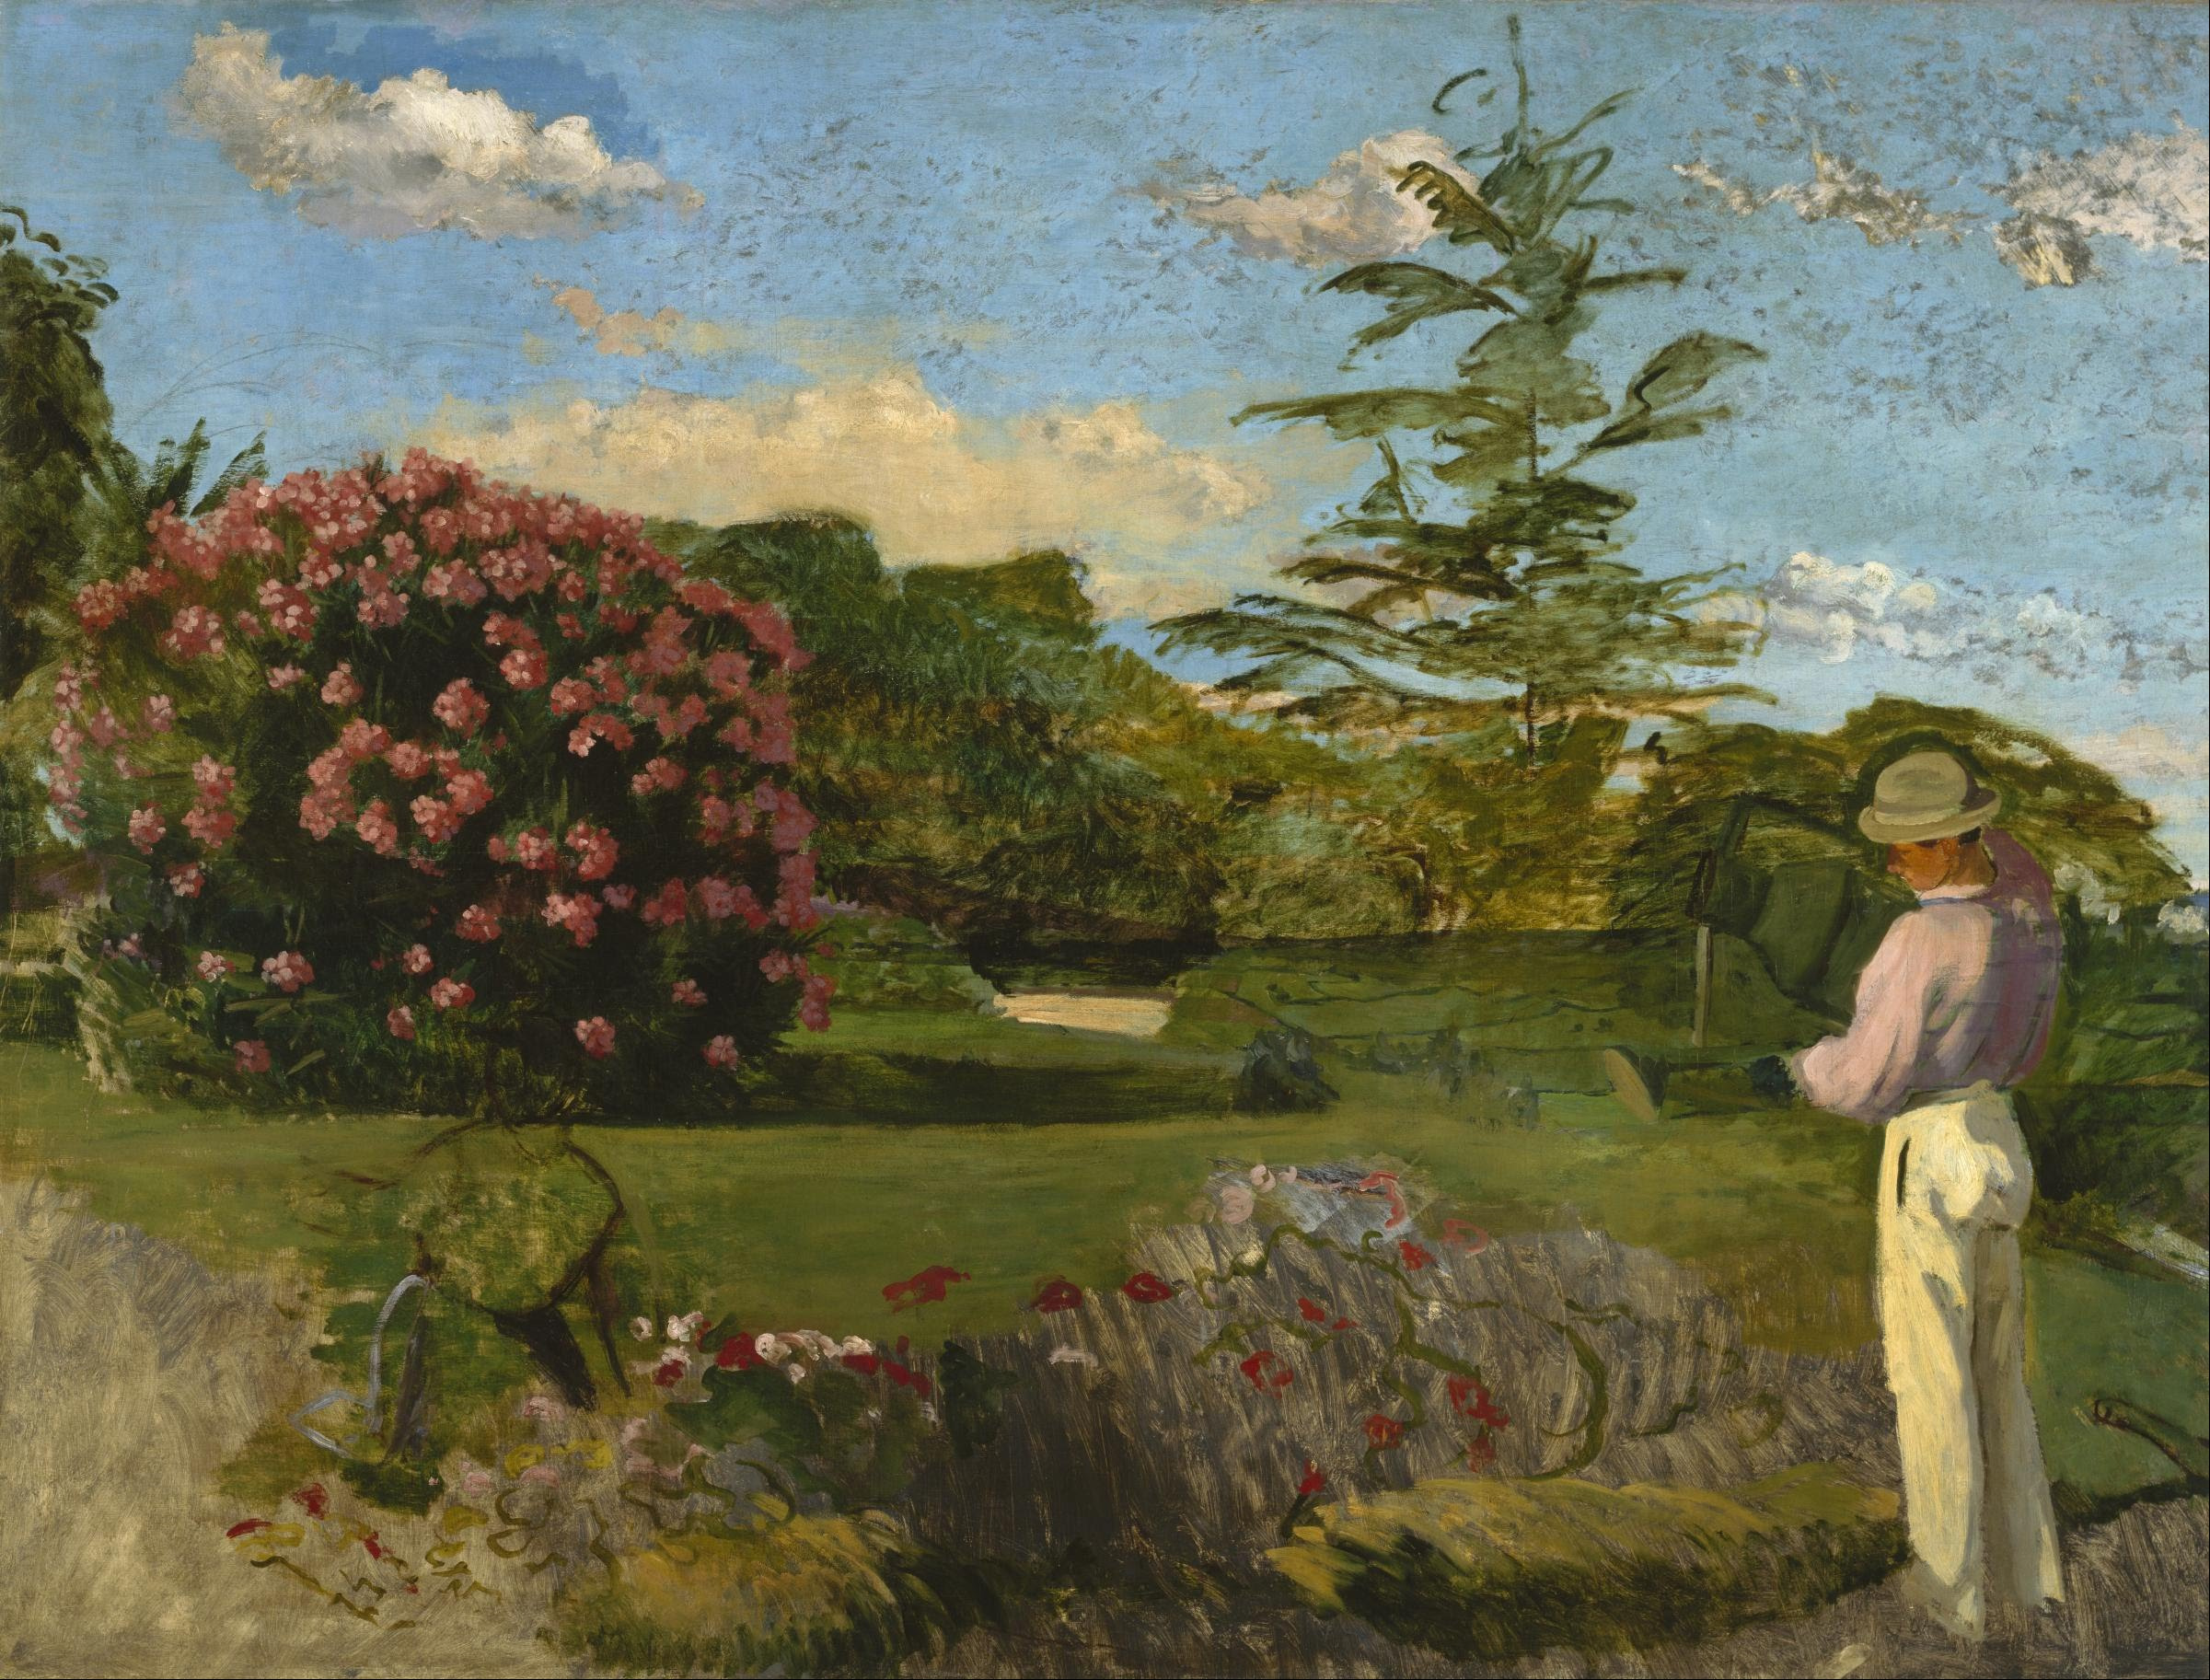 The Little Gardener by Frédéric Bazille - c.1866 - 127 x 170 cm Museum of Fine Arts